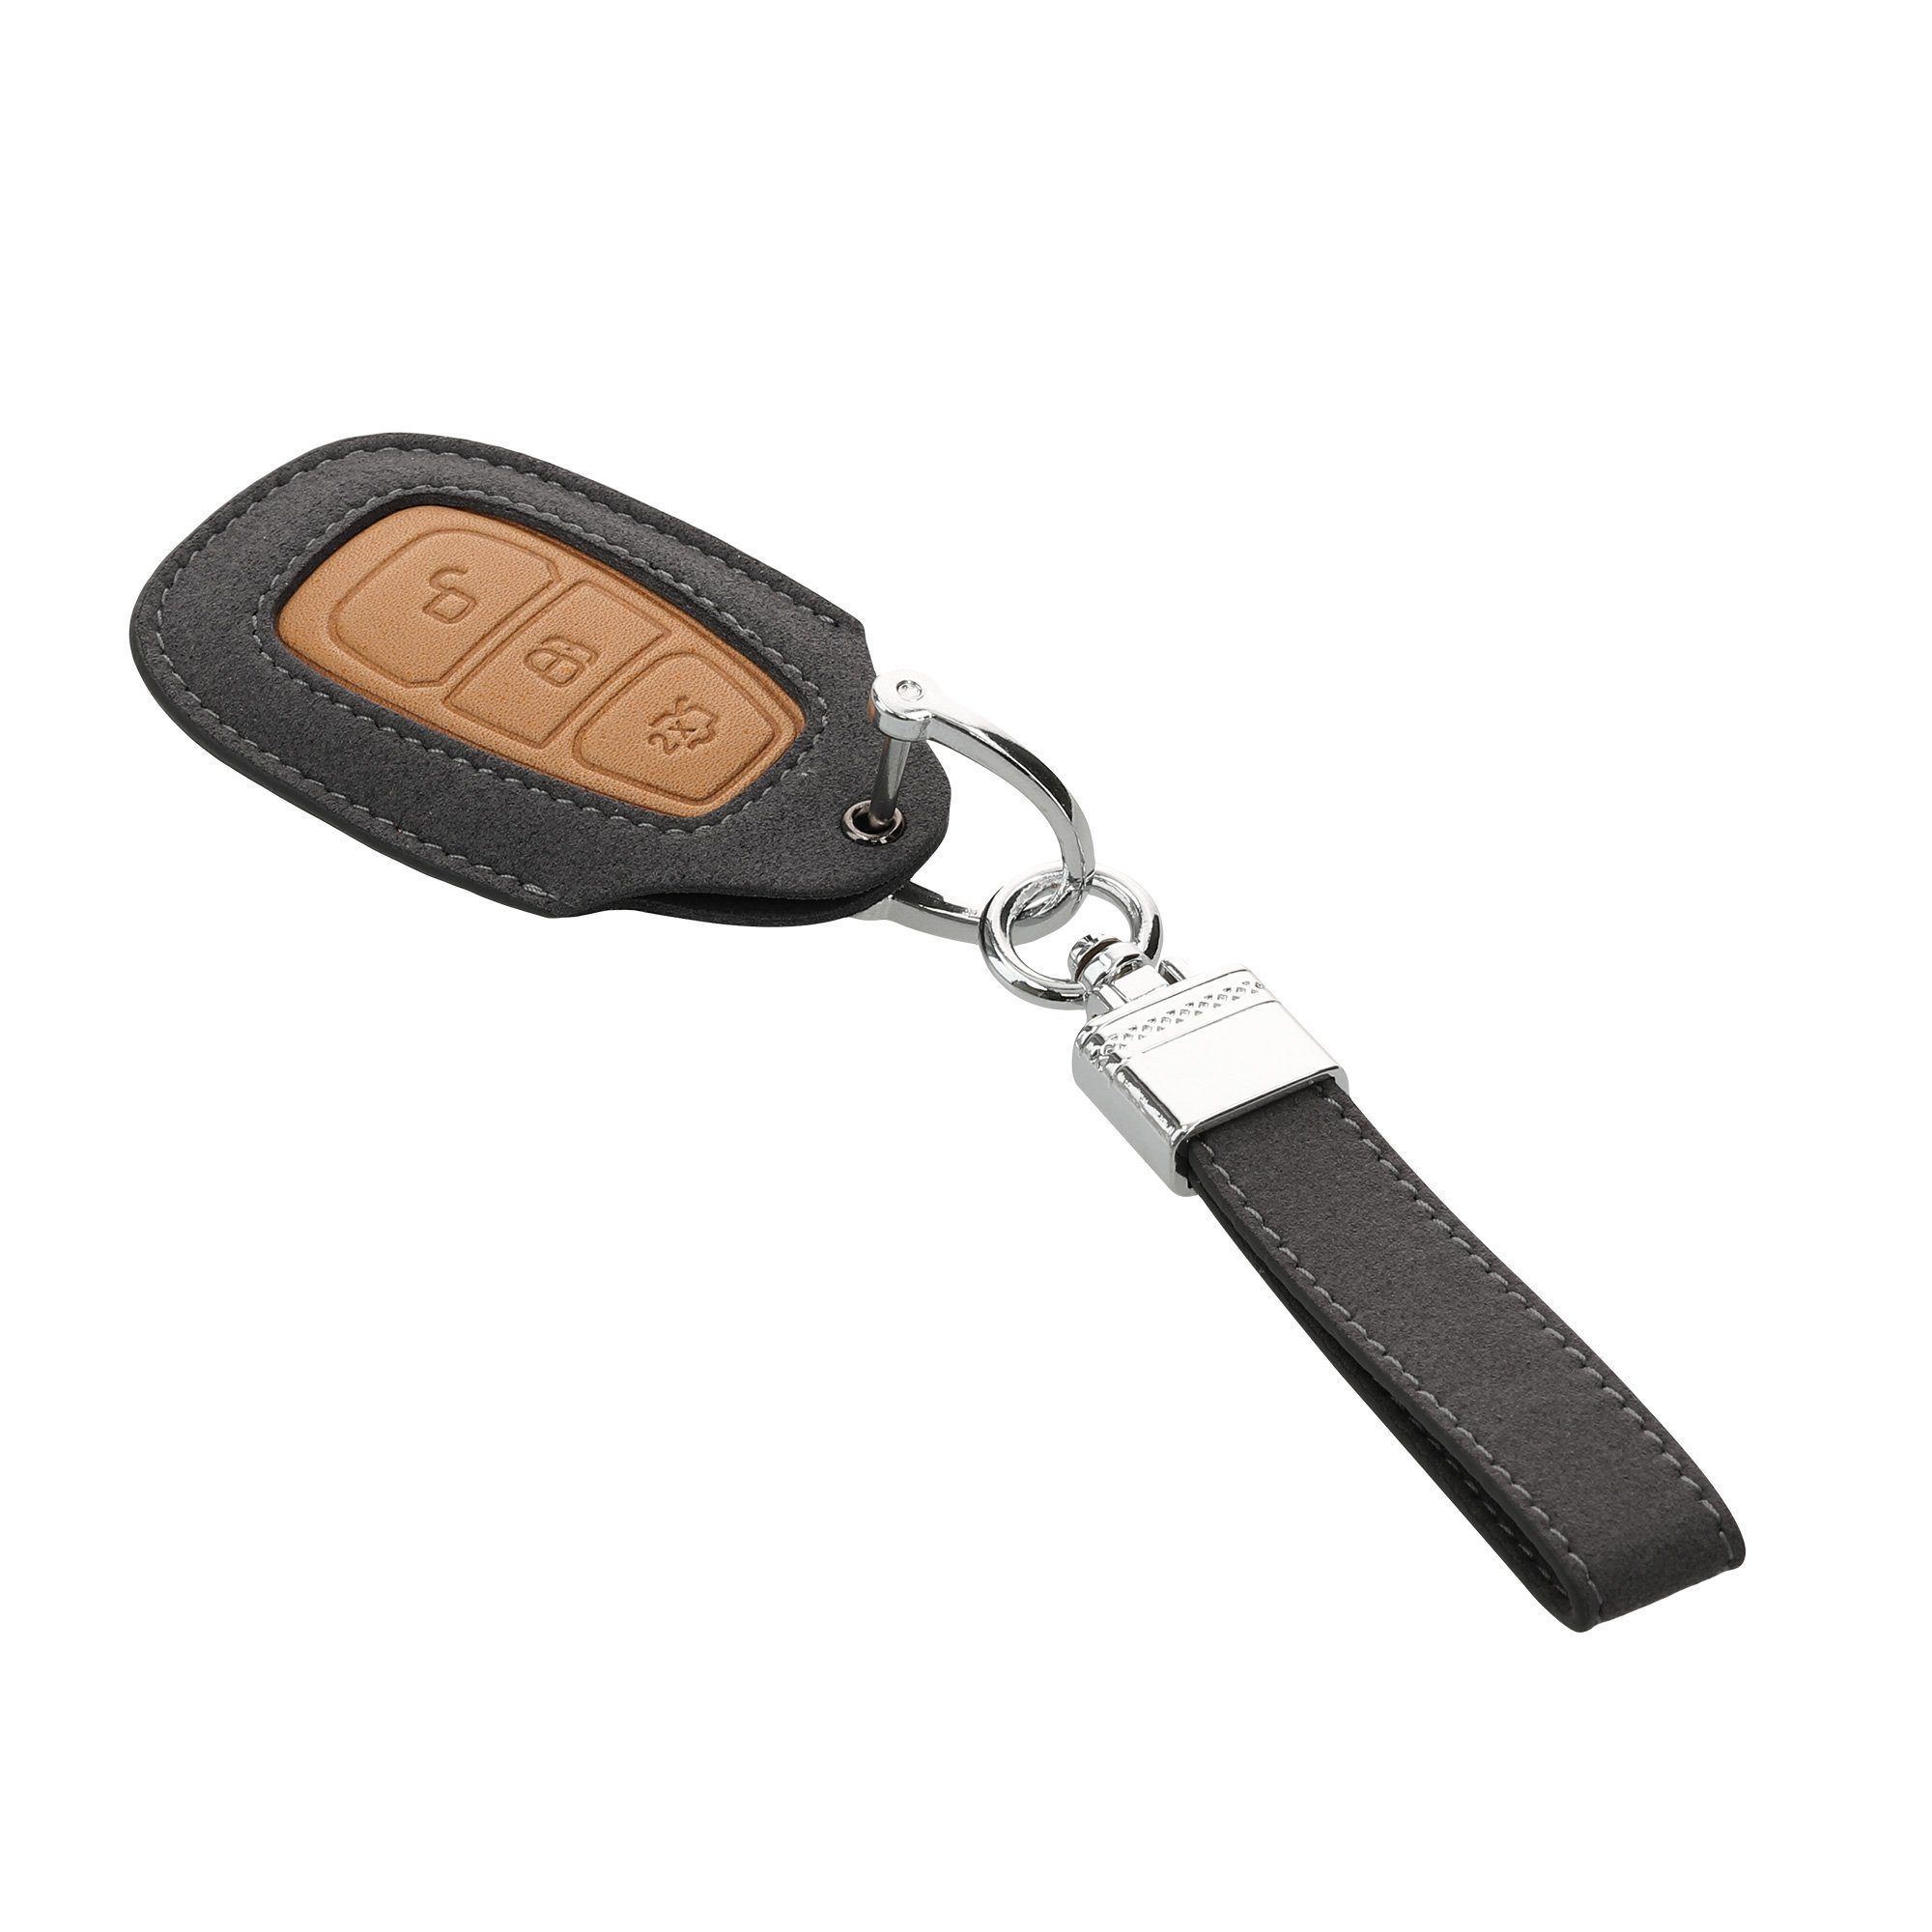 Case für kwmobile Braun Schlüssel Hülle Grau in - Autoschlüssel Ford, Schlüsseltasche Schlüsselhülle Kunstleder Cover